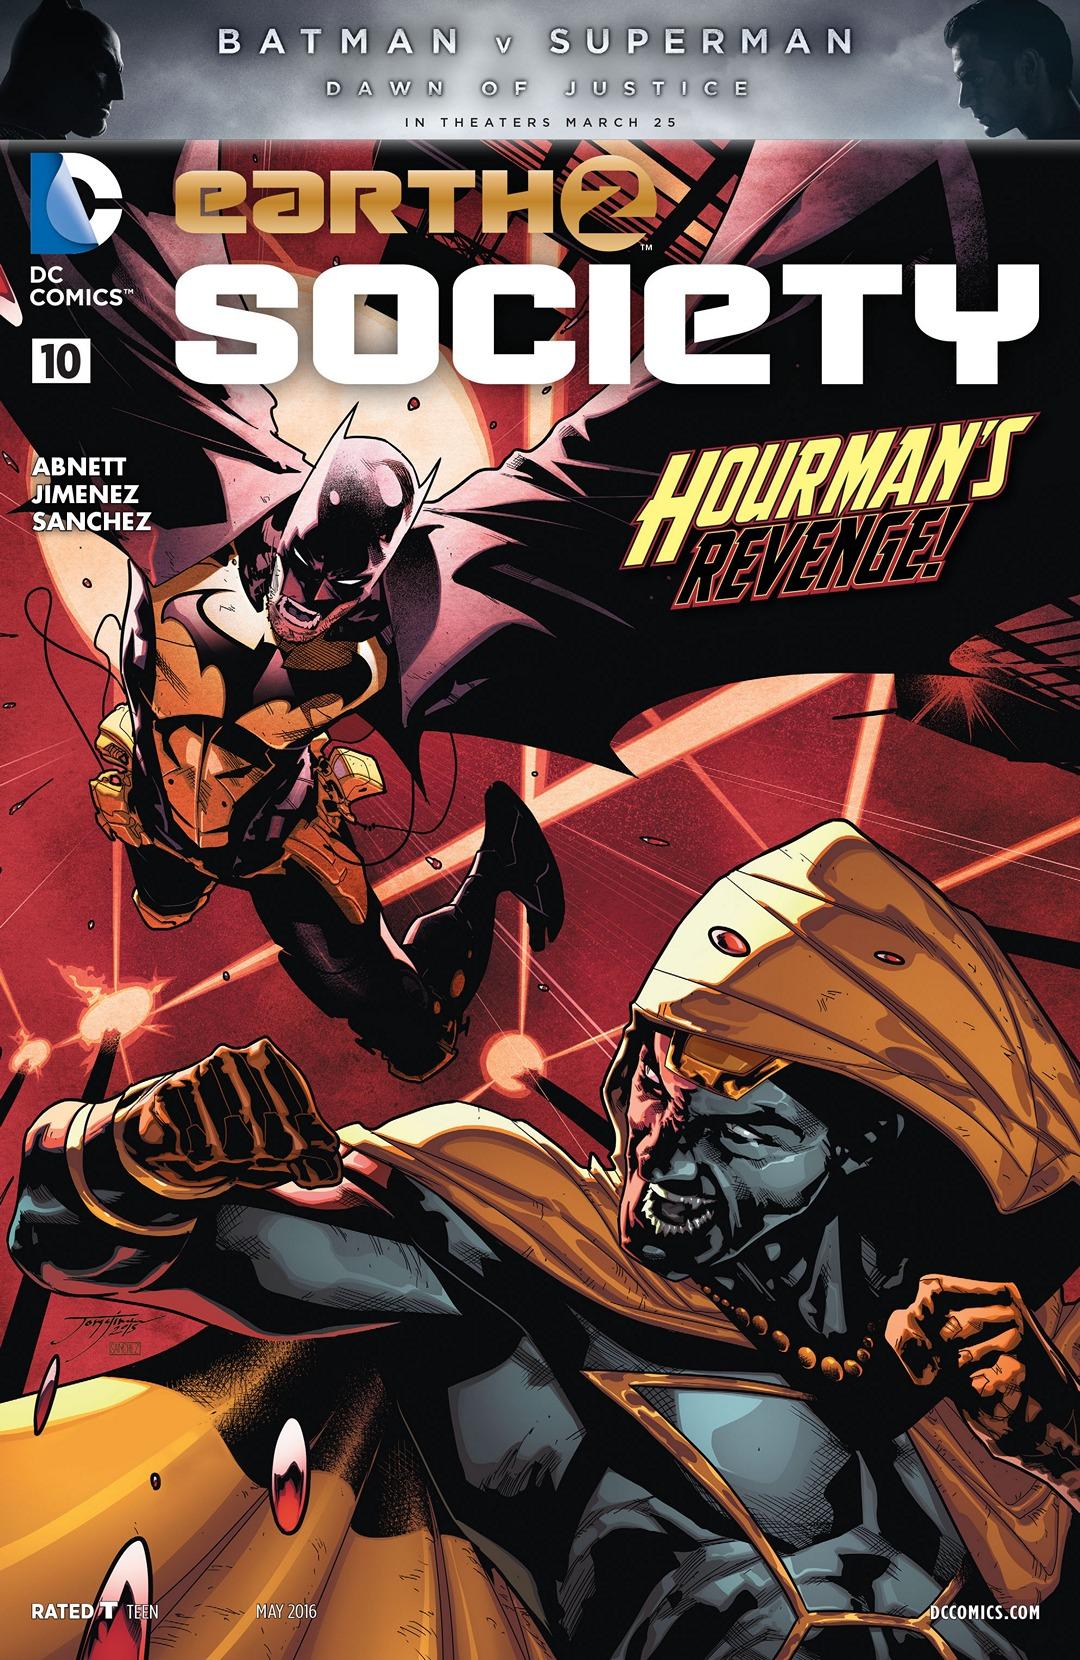 Earth 2: Society Vol. 1 #10